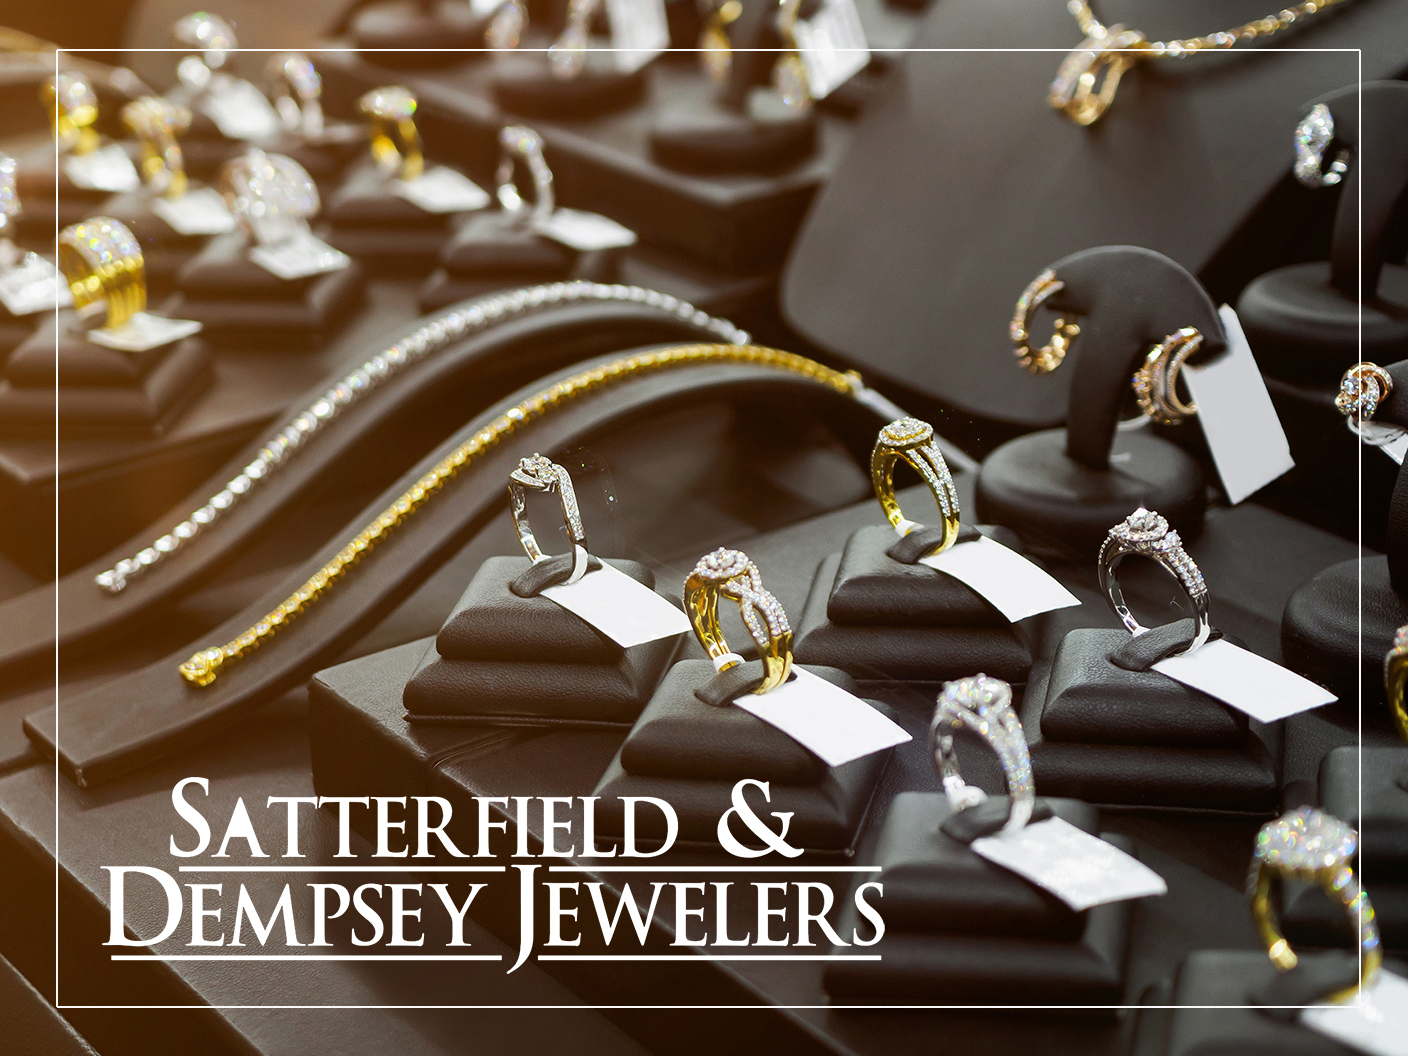 Satterfield & Dempsey Jewelers